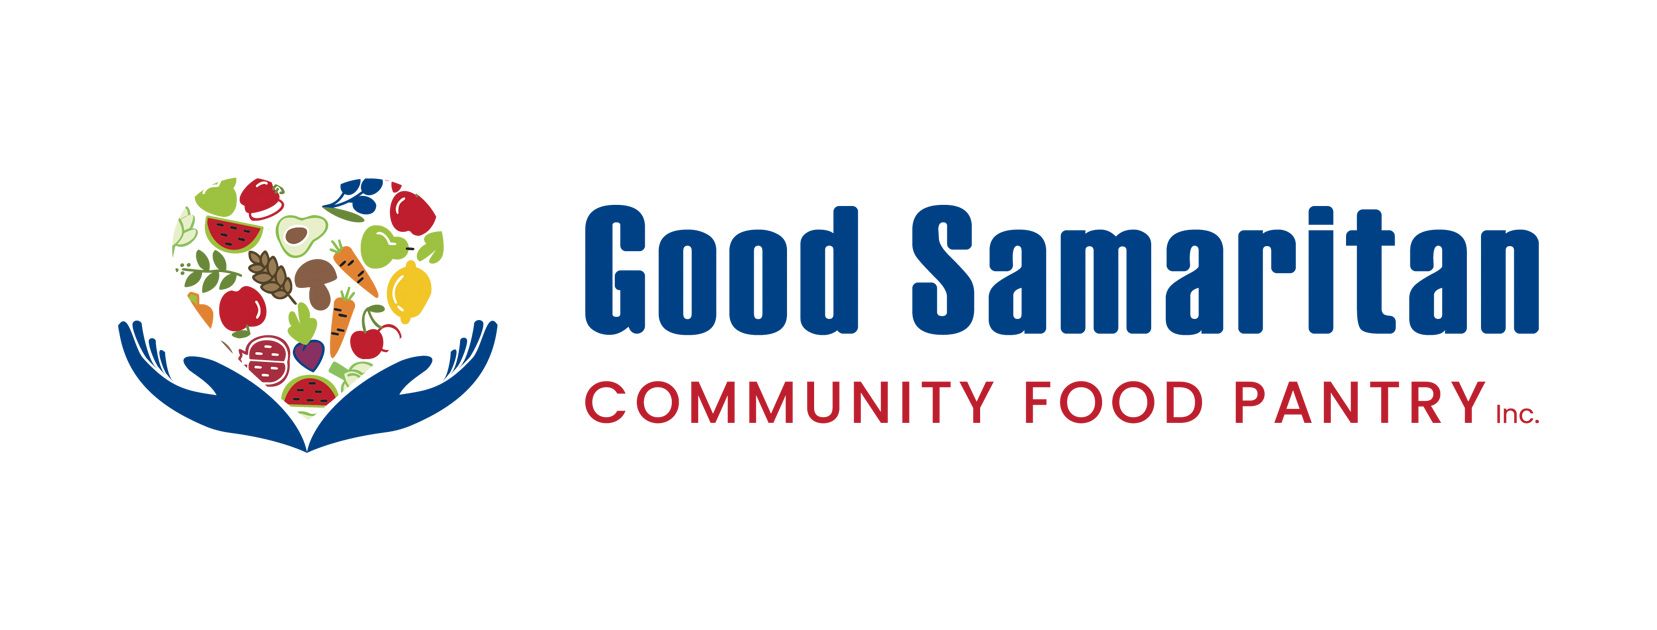 Good Samaritan Community Food Pantry